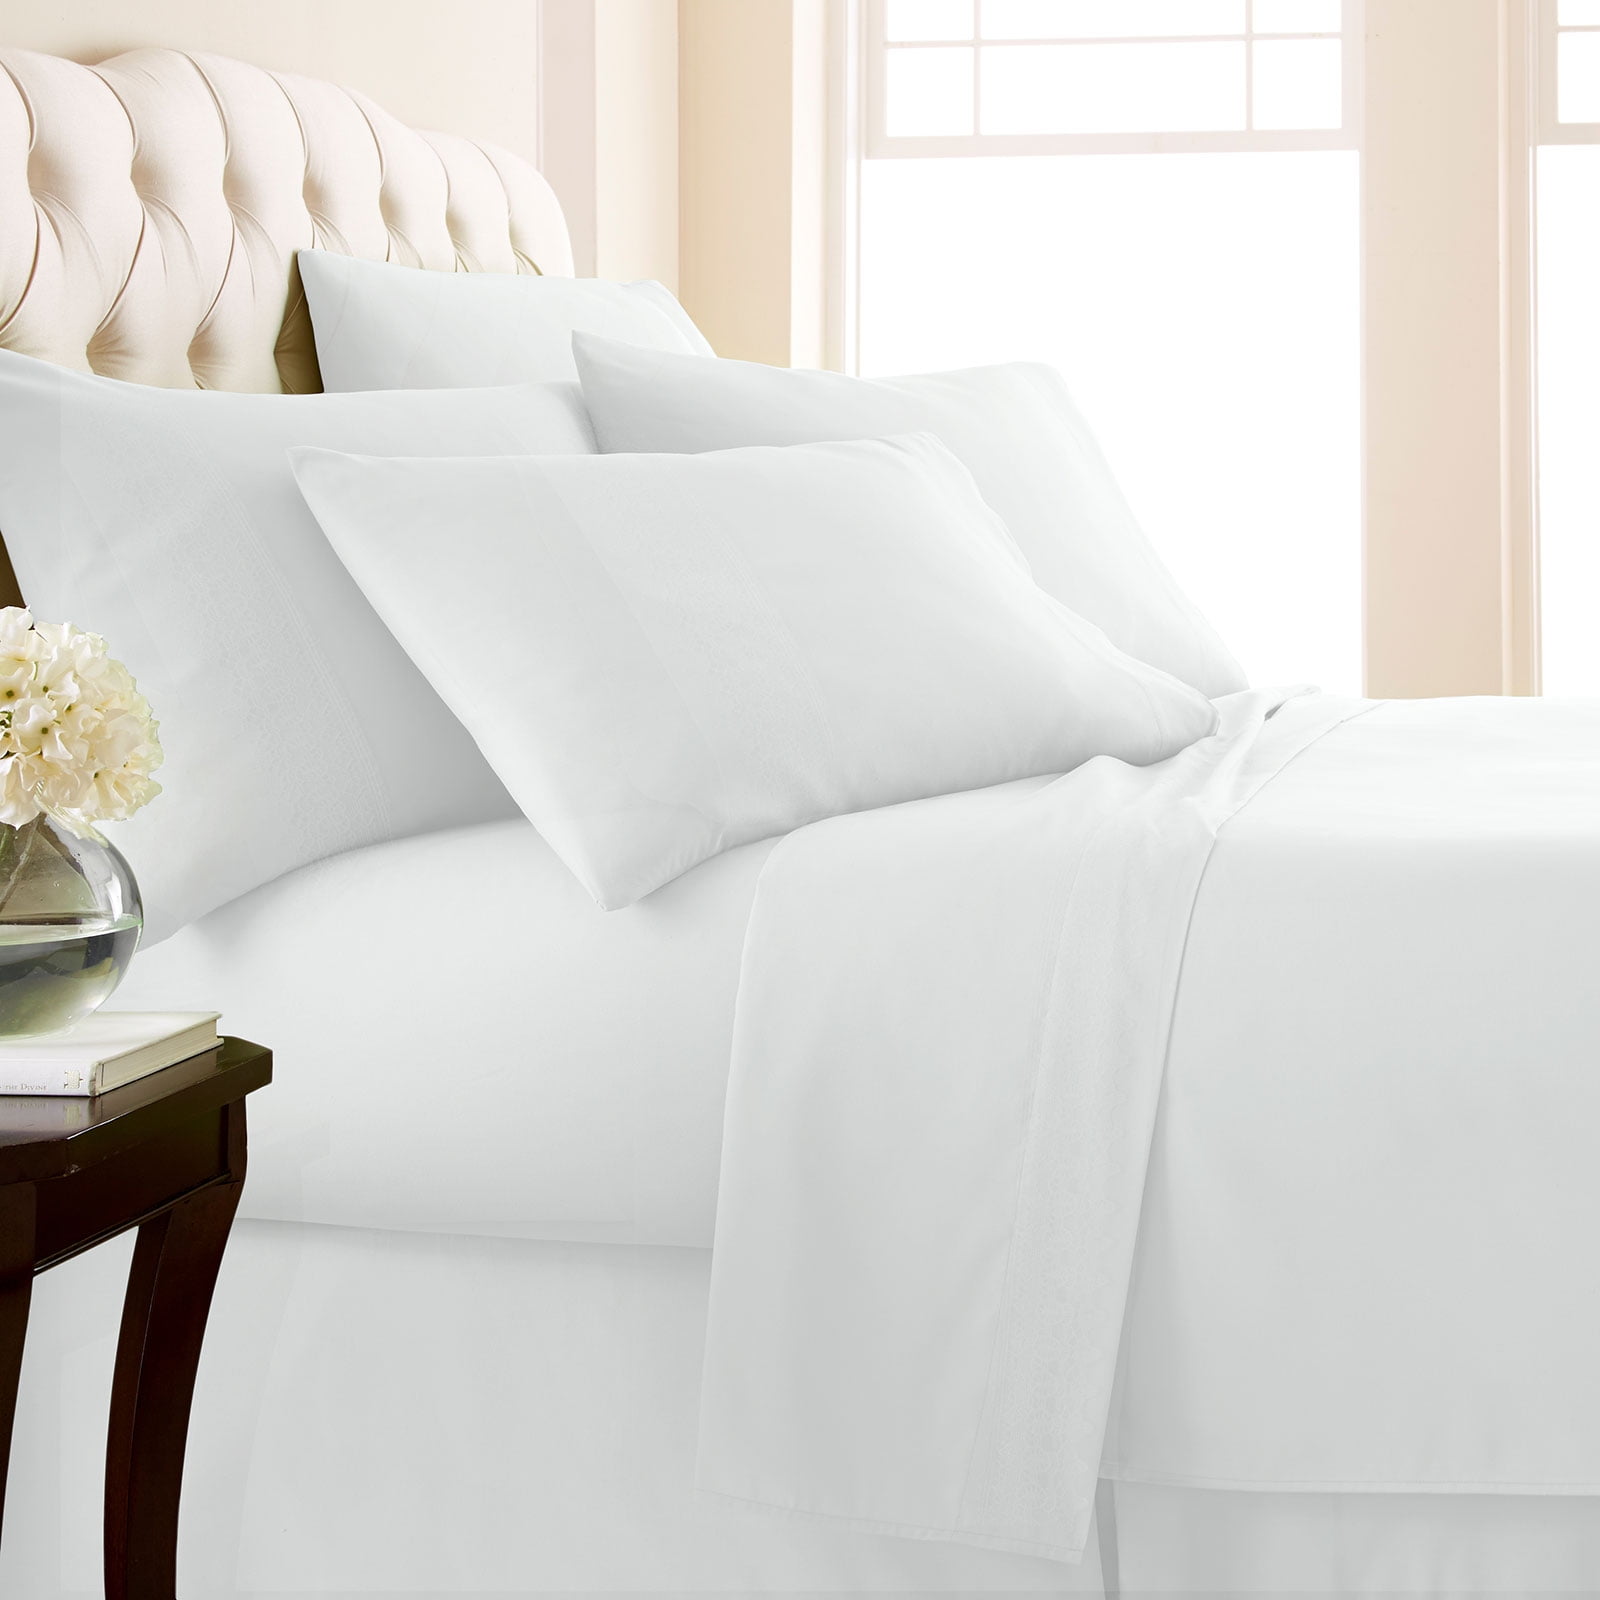 Details about   100% Cotton 4pc Pillow Bed Sheet Set Silver 1000 Tc Extra Deep Pocket 